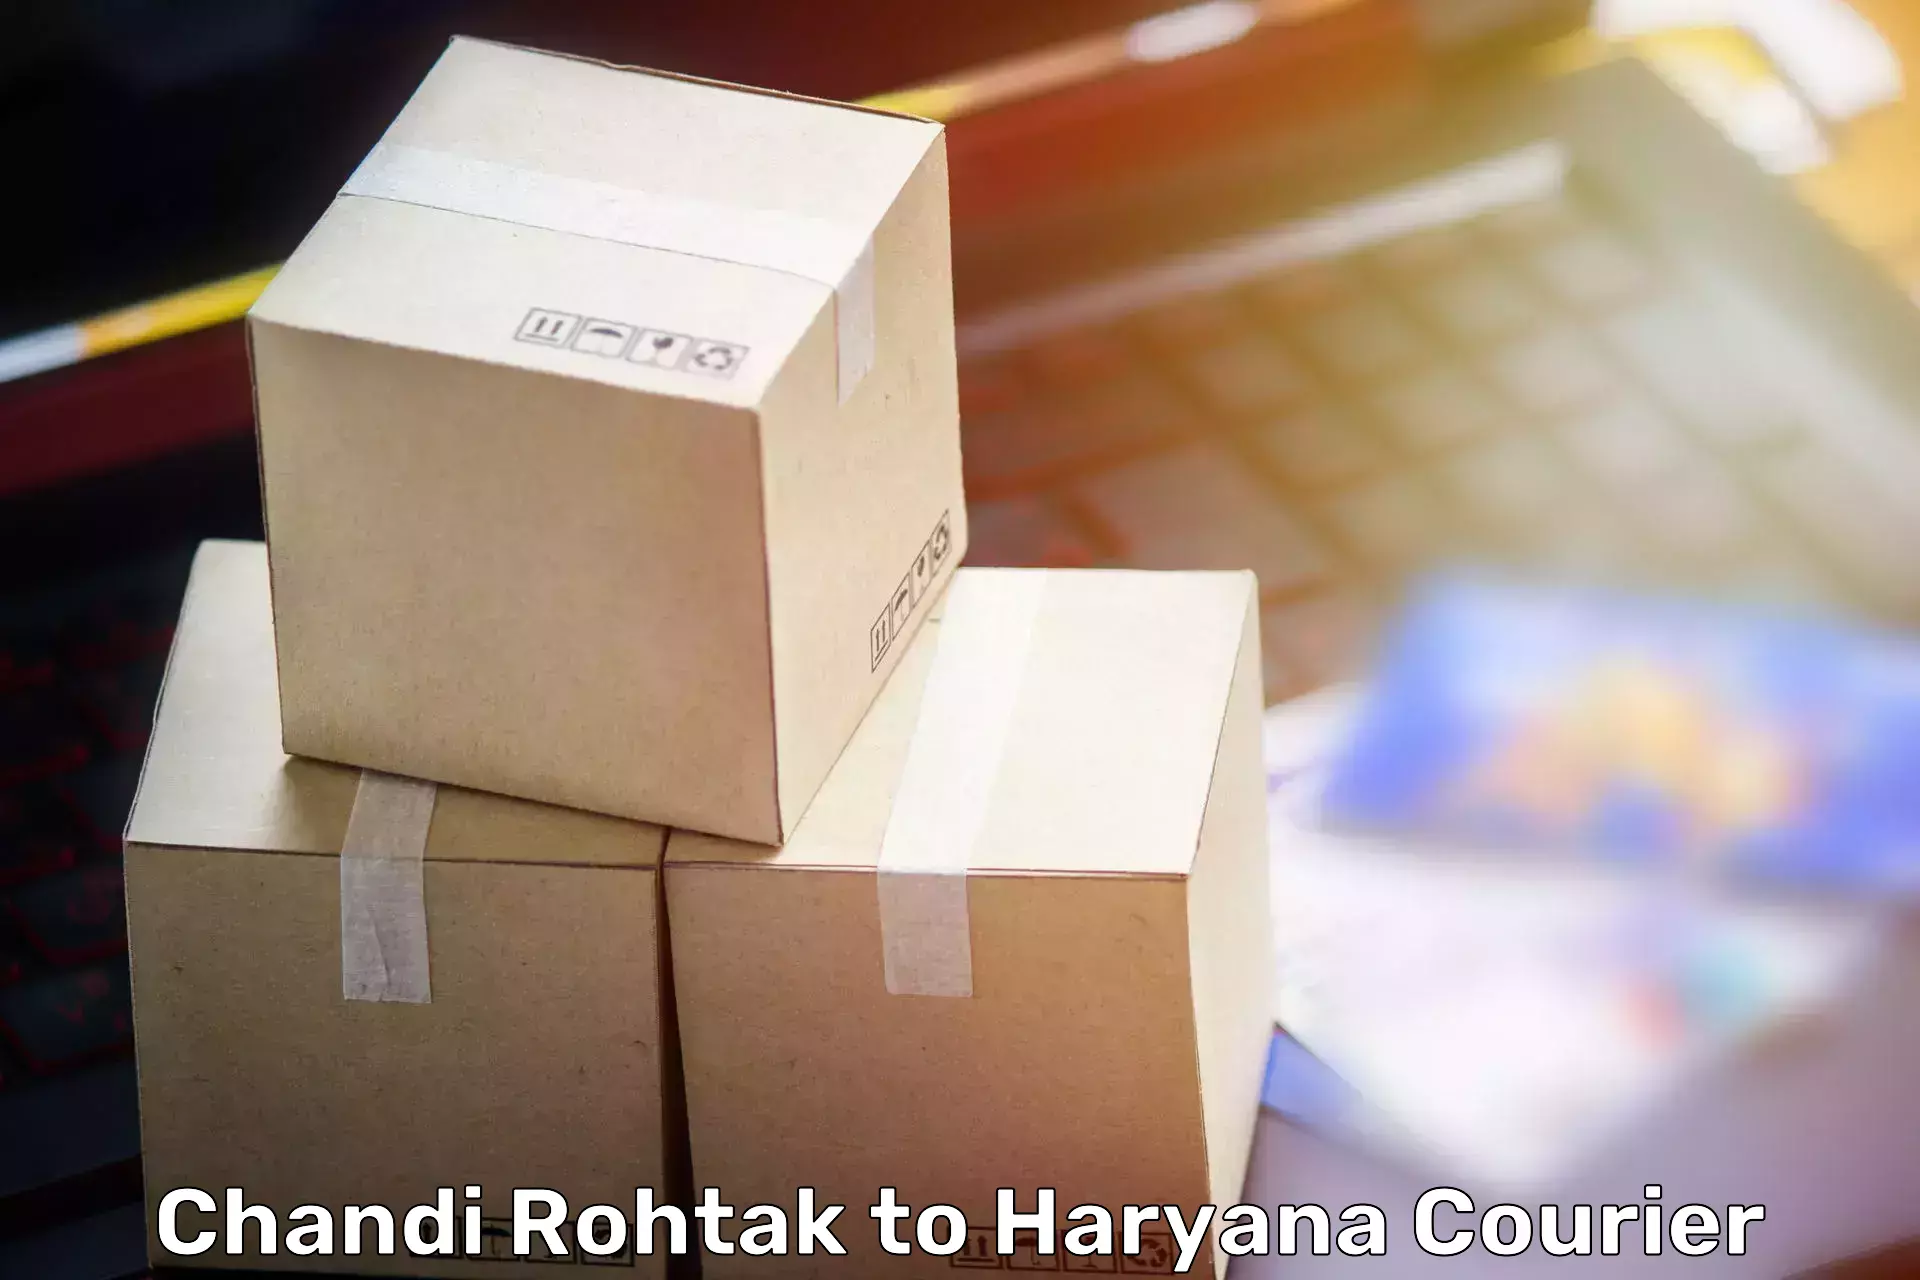 Specialized moving company Chandi Rohtak to Karnal